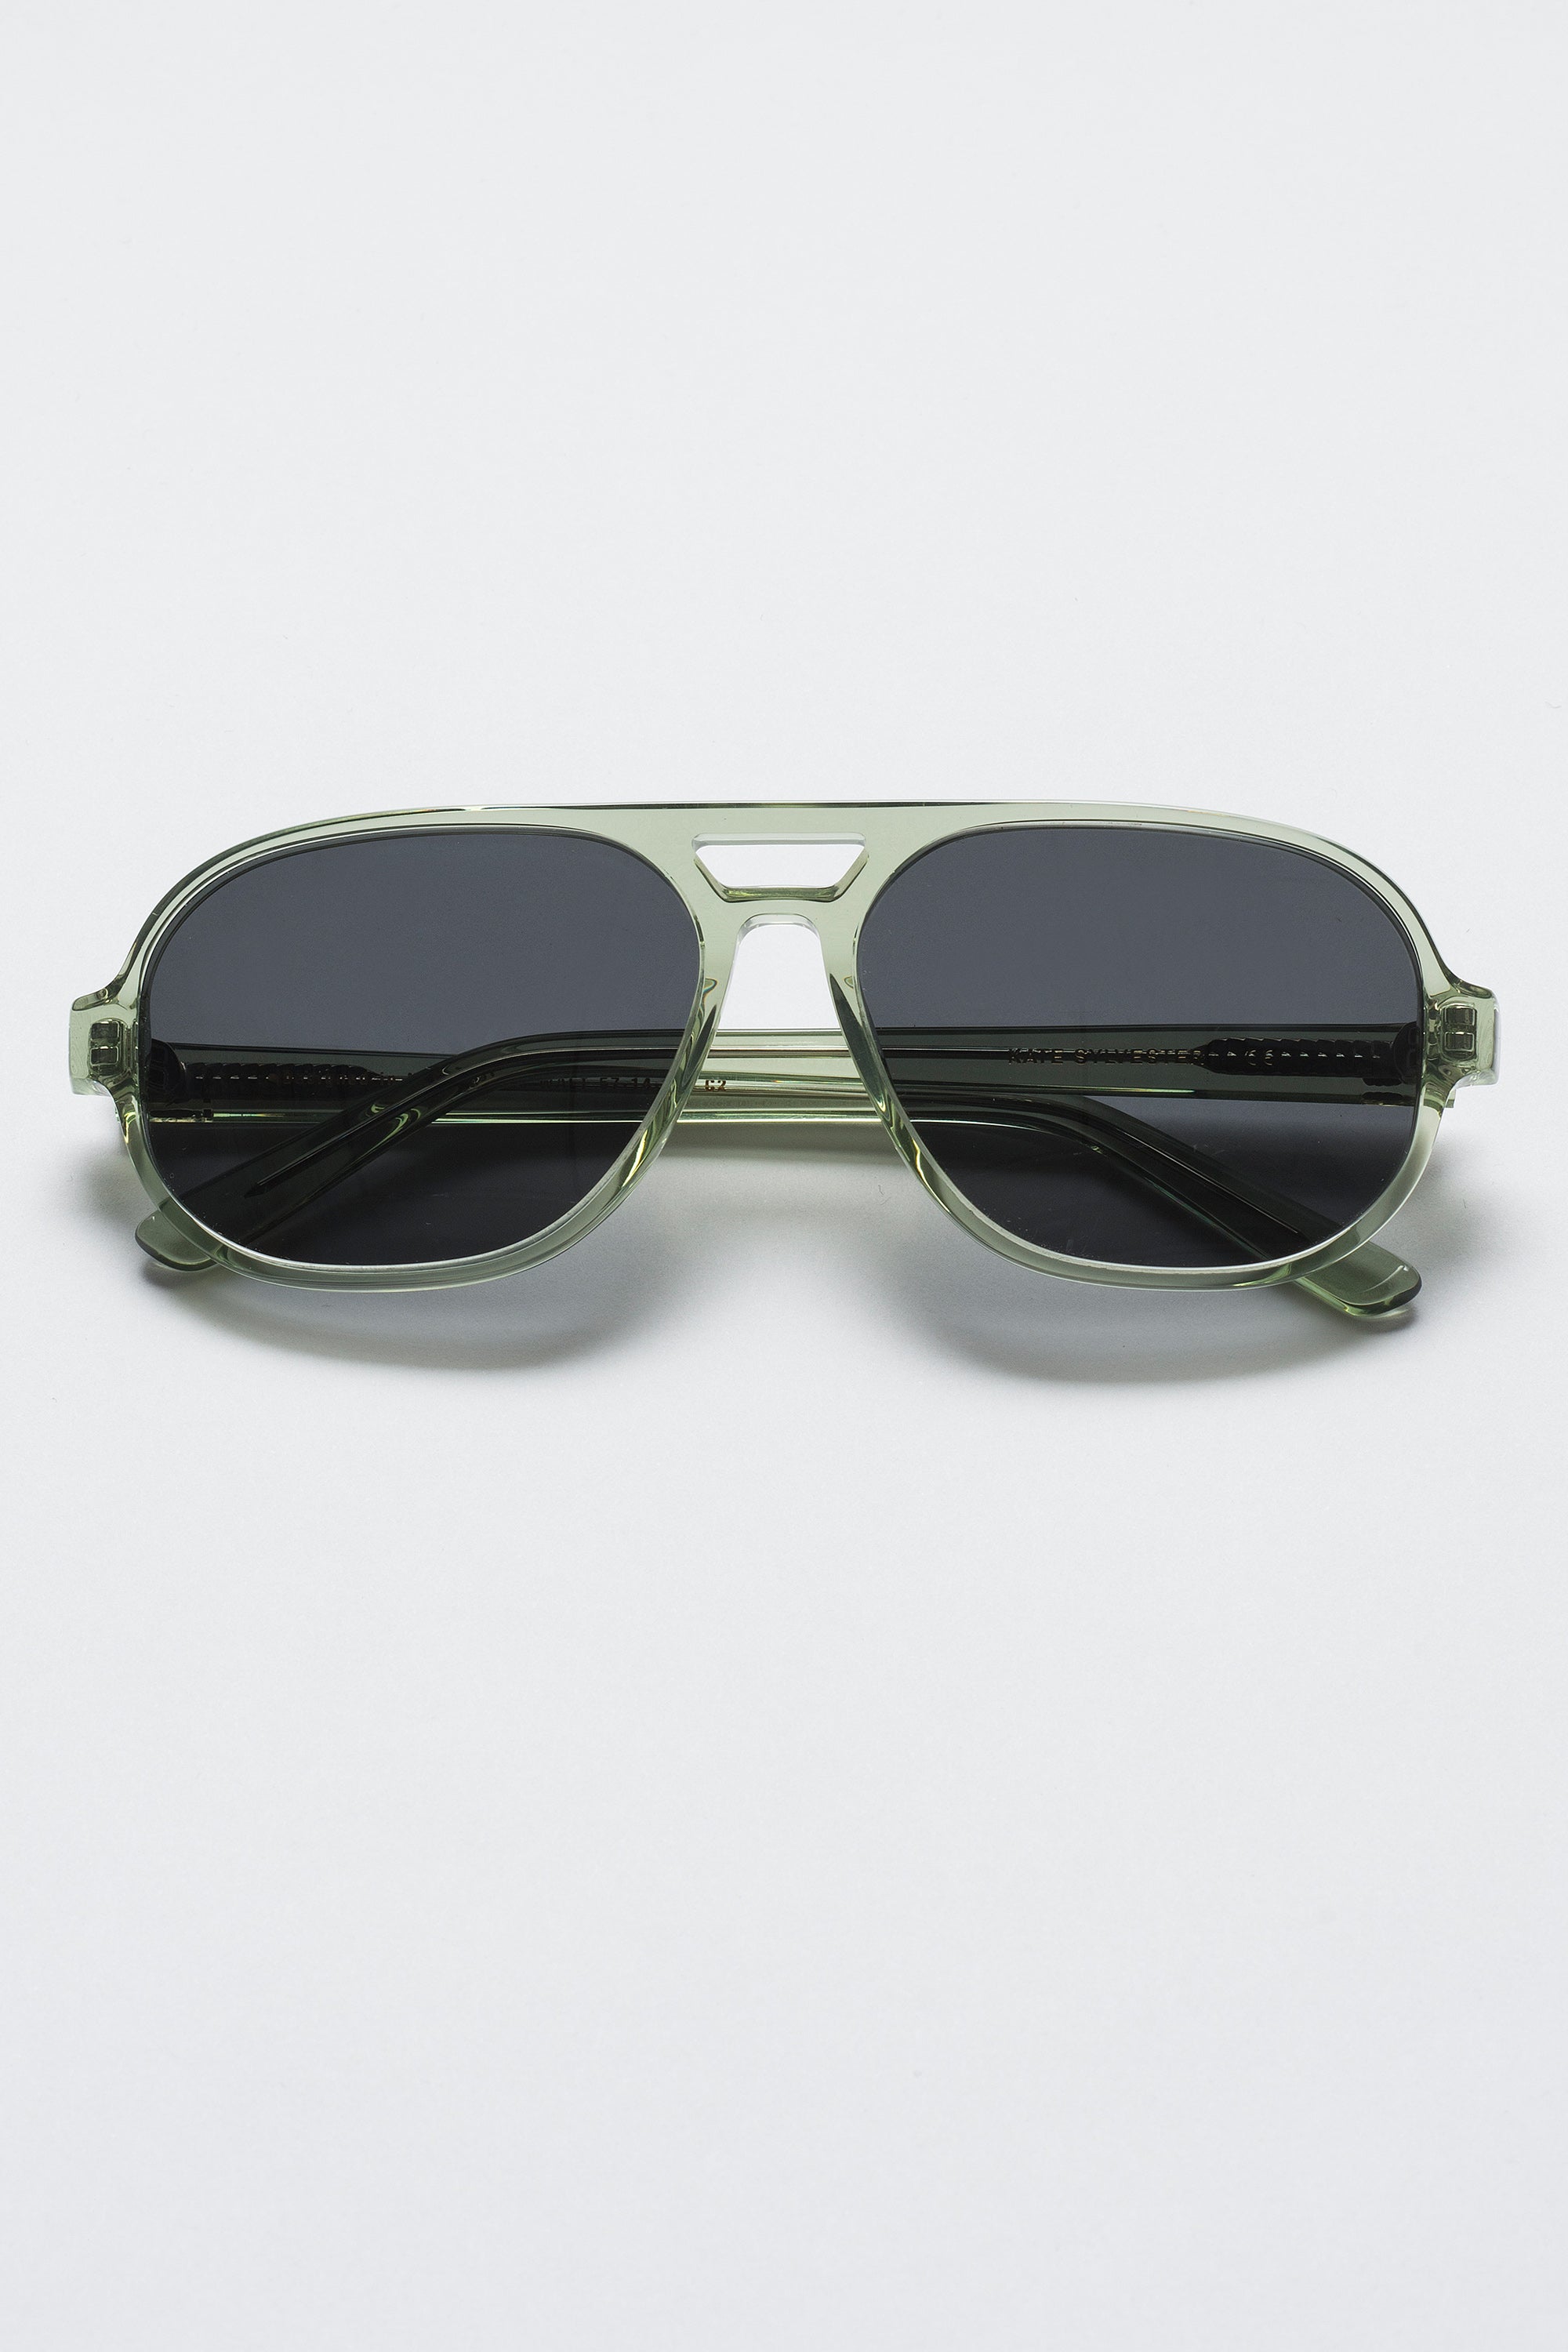 Walter Van Beirendock 3 C5 Mask Sunglasses by LINDA FARROW – LINDA FARROW  (INT'L)